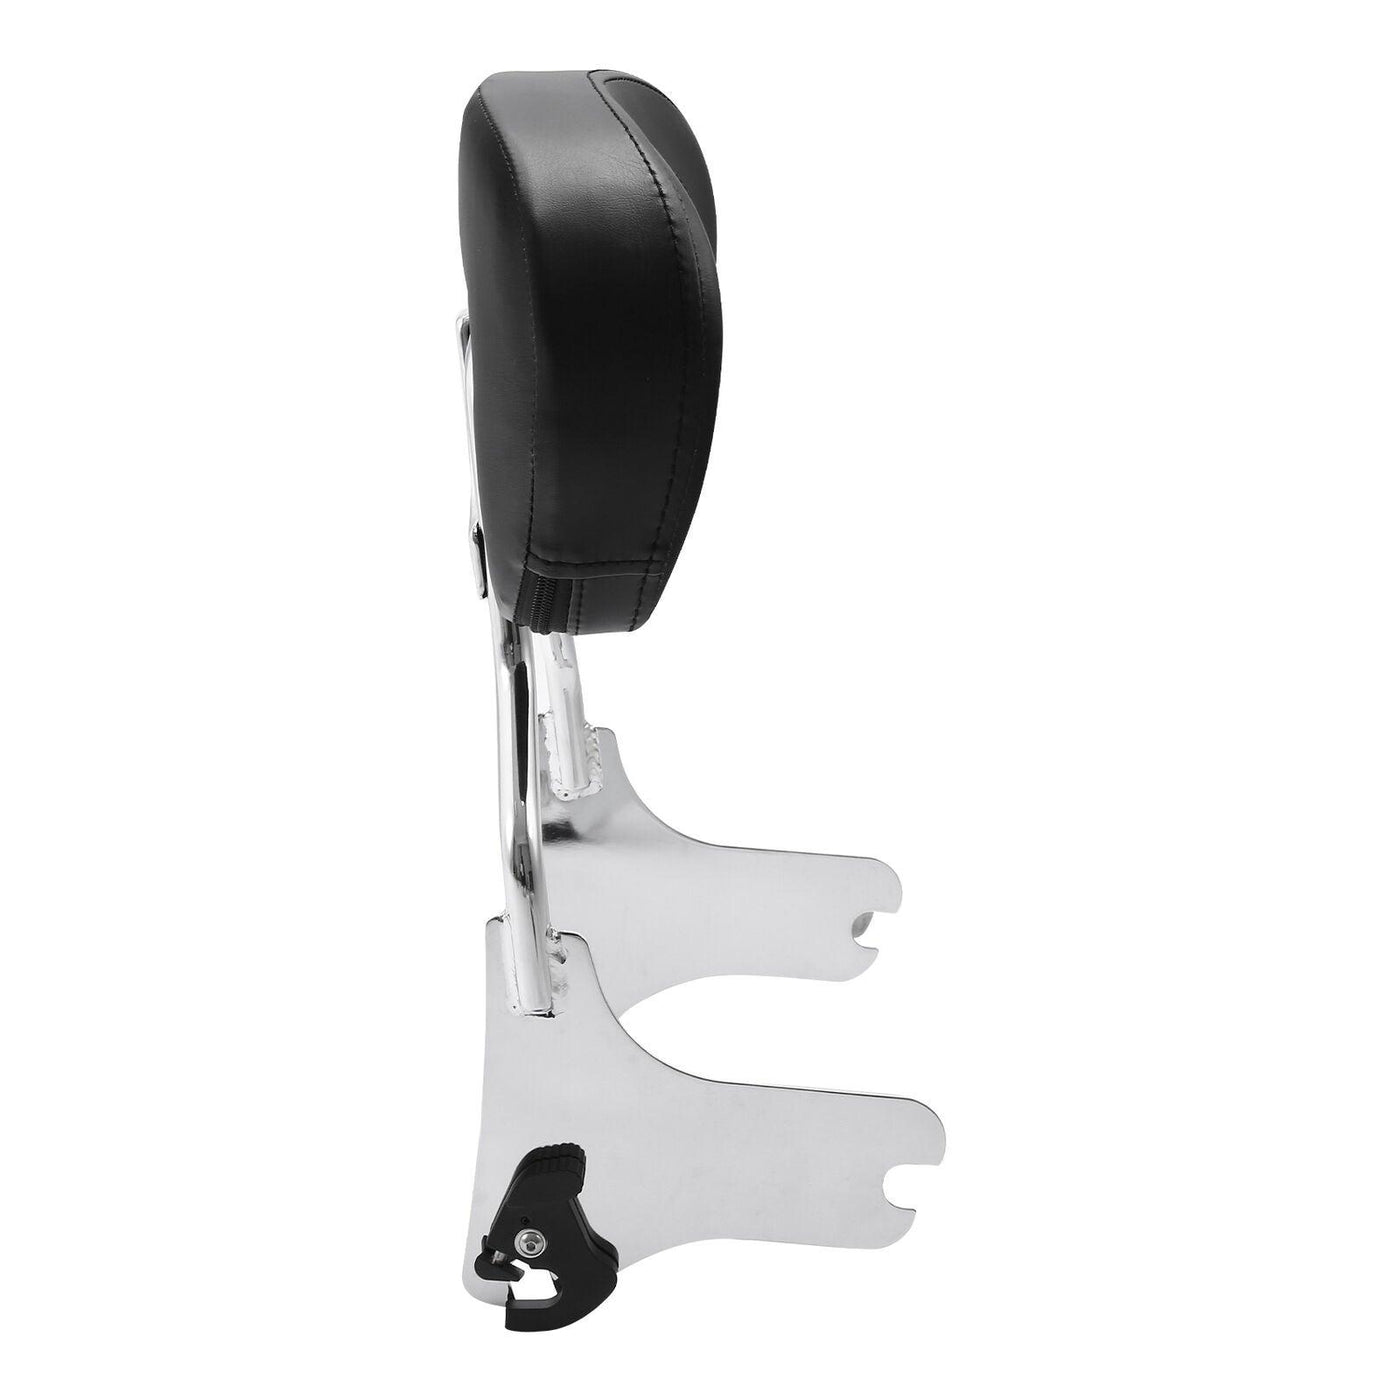 Chrome/Black Passenger Backrest Pad Sissy Bar Fit For Harley Electra Glide 97-08 - Moto Life Products